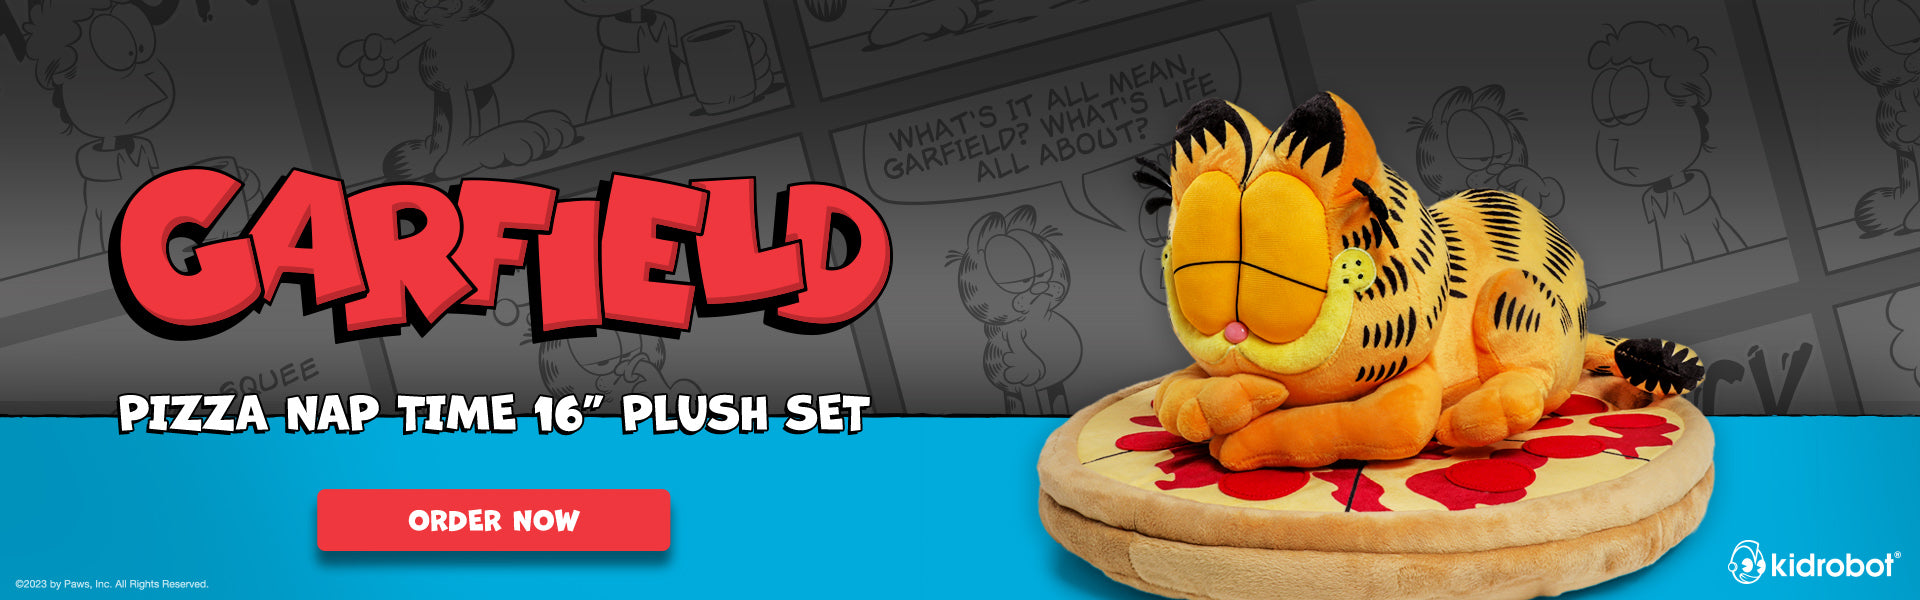 Garfield Pizza Nap Time 16” Plush Set (PRE-ORDER)